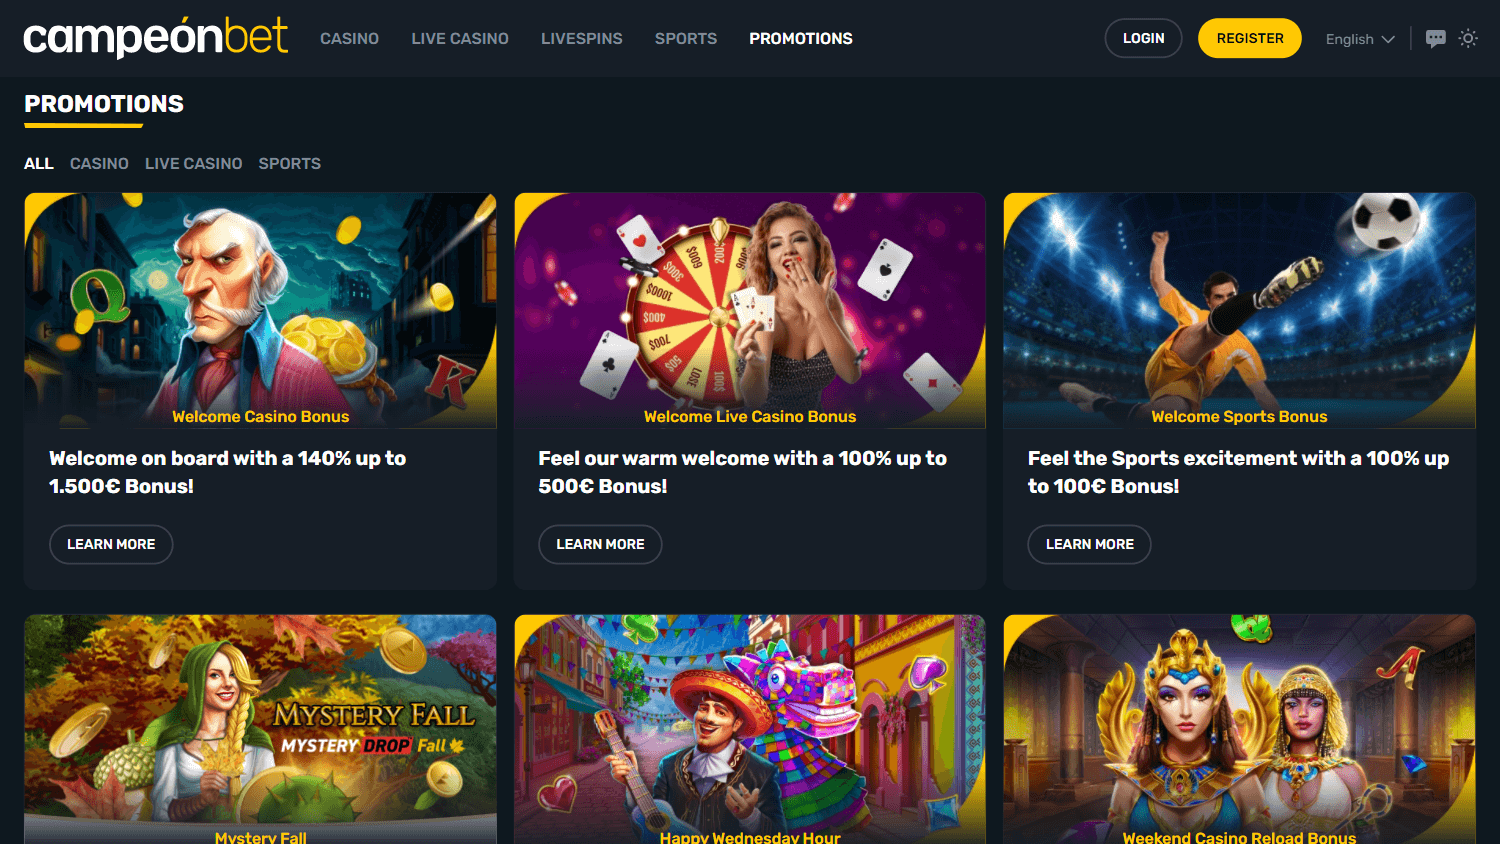 campeonbet_casino_promotions_desktop